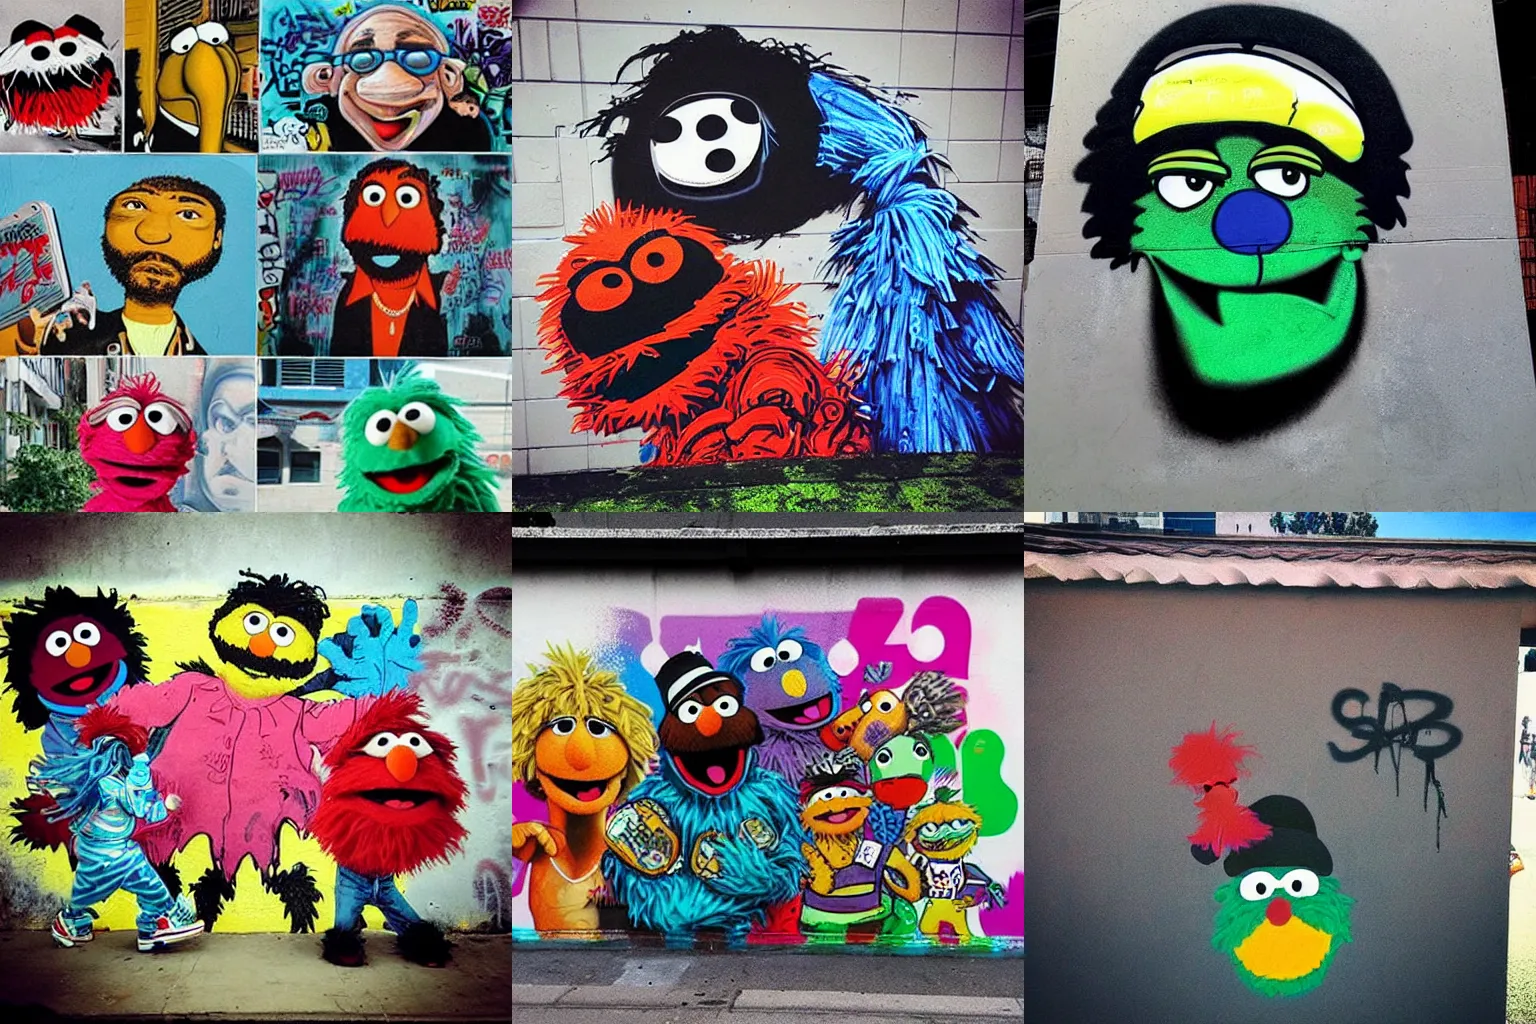 Prompt: “Sesame Street characters, LA street gang, snoop, ice cube, nwa, 90s, rough, style street art, graffiti, spray paint”